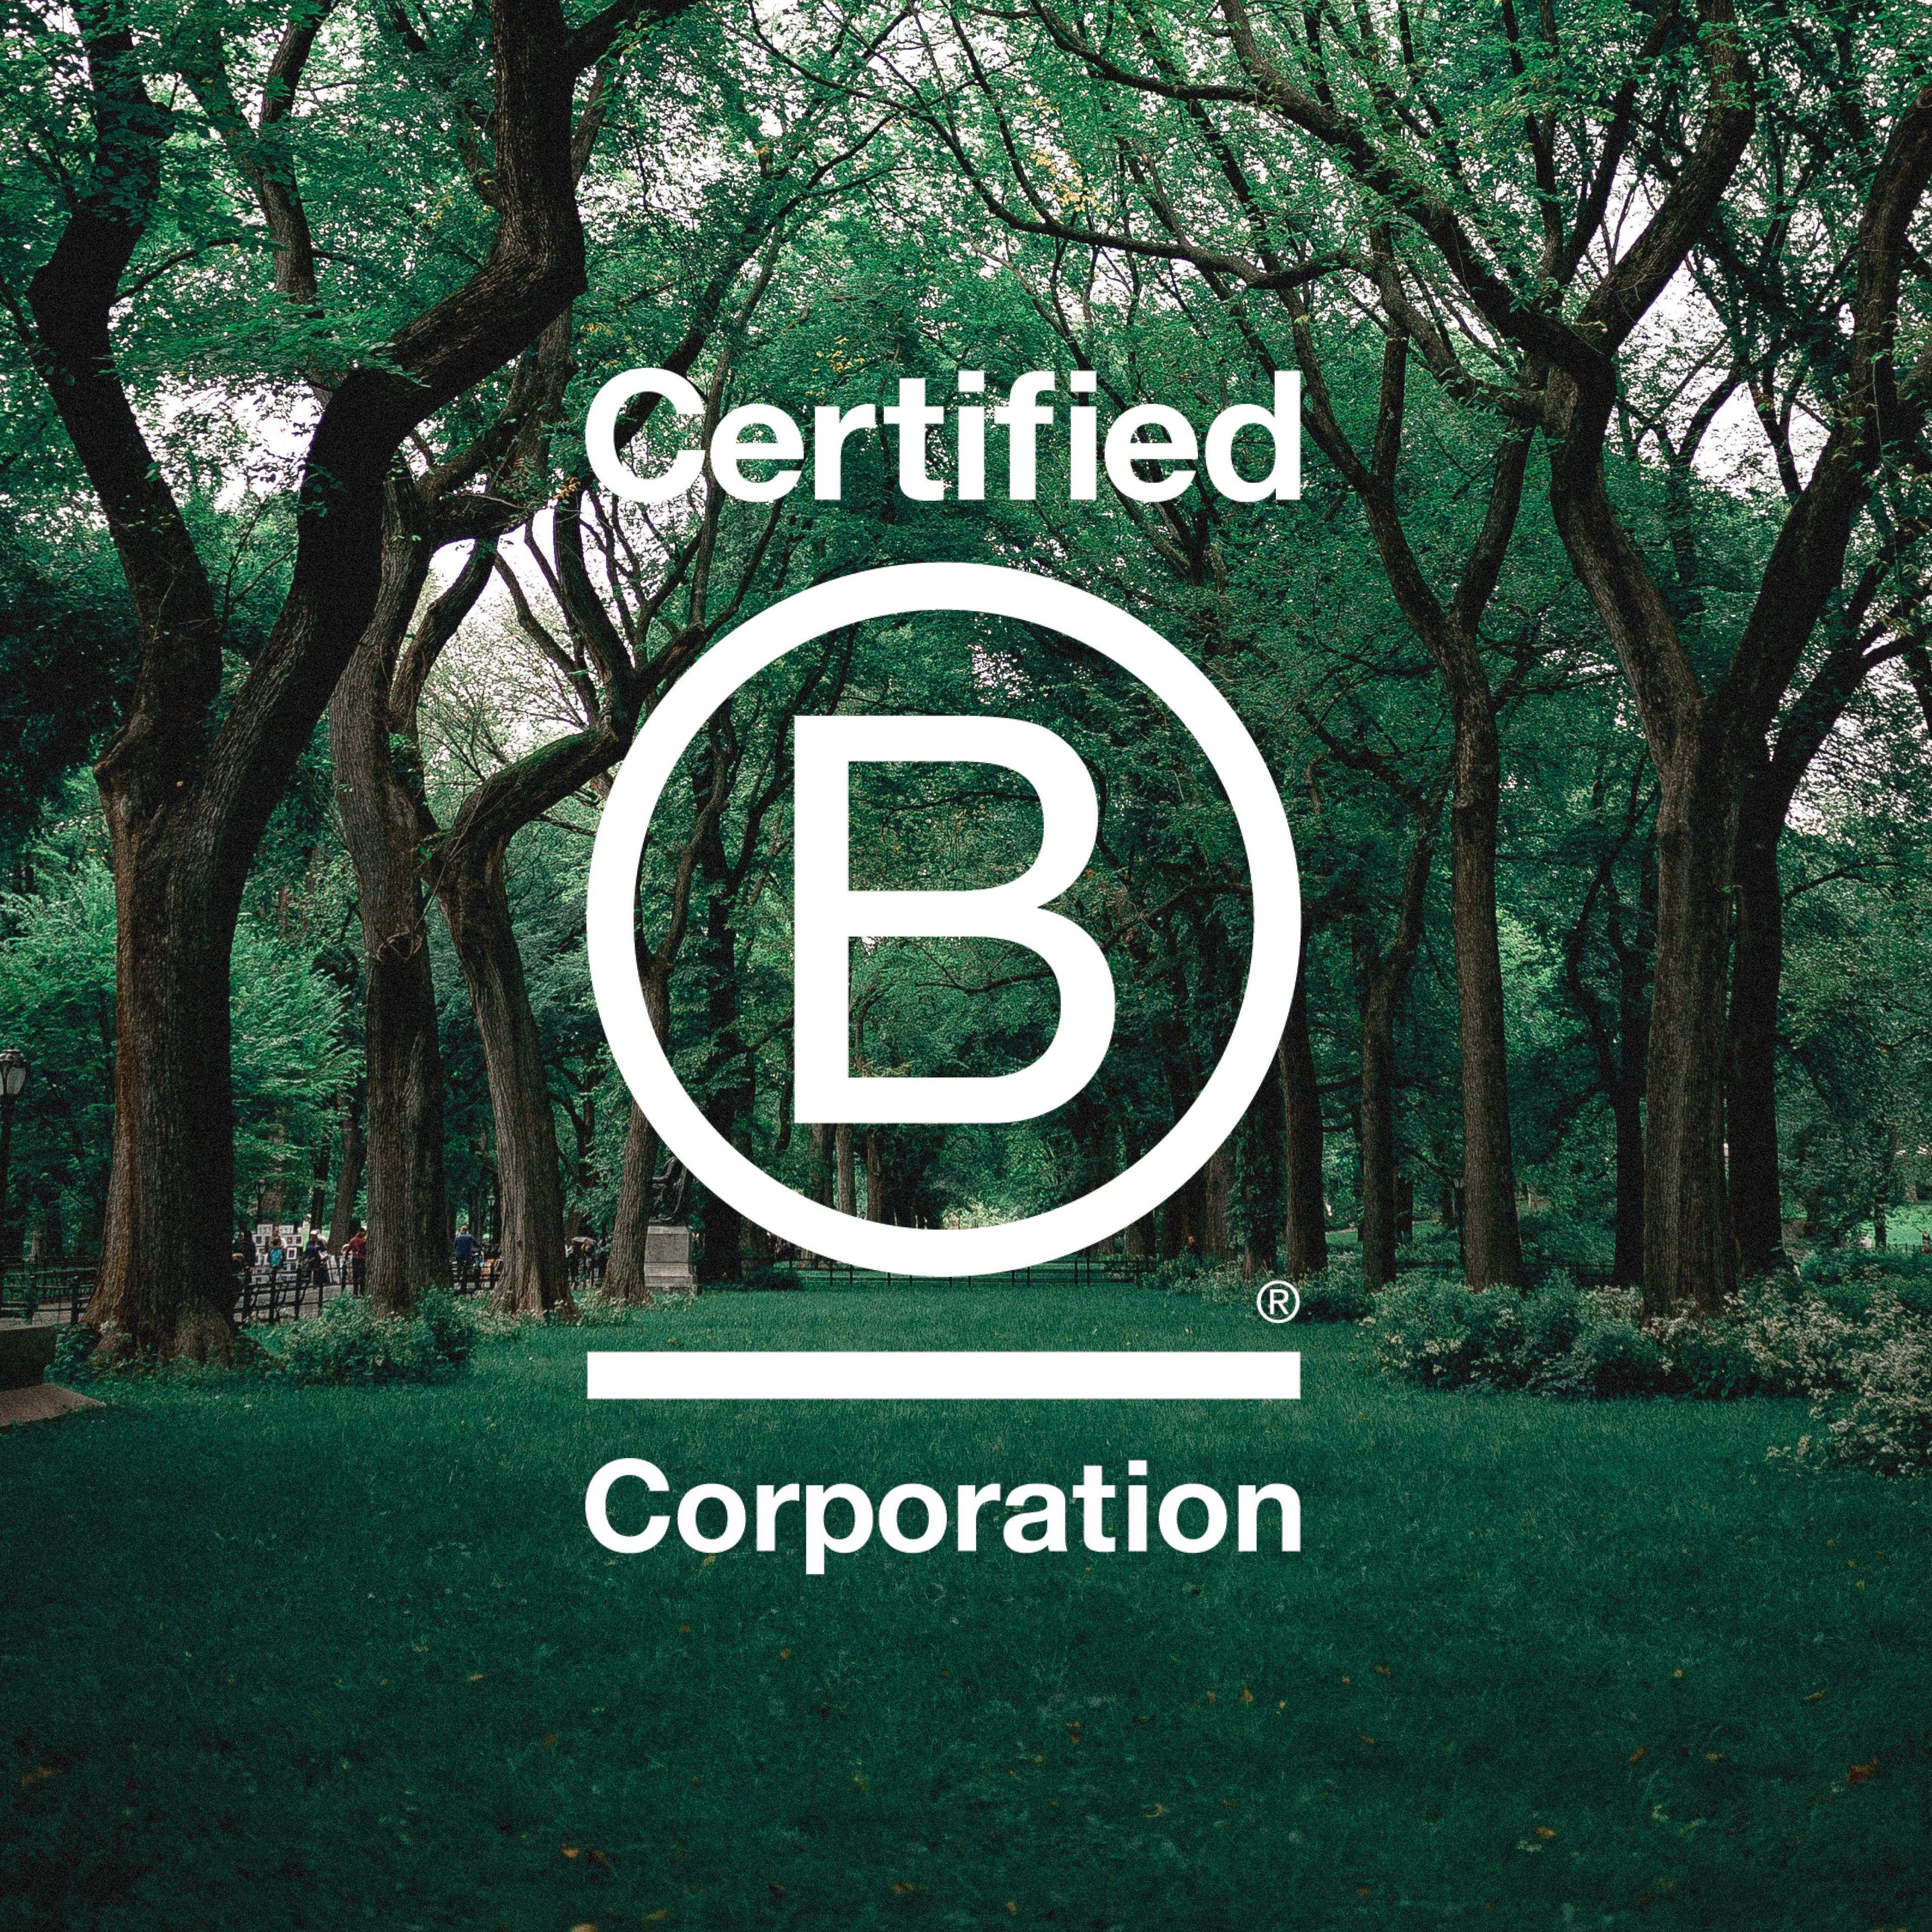 Merchery B Corp certified